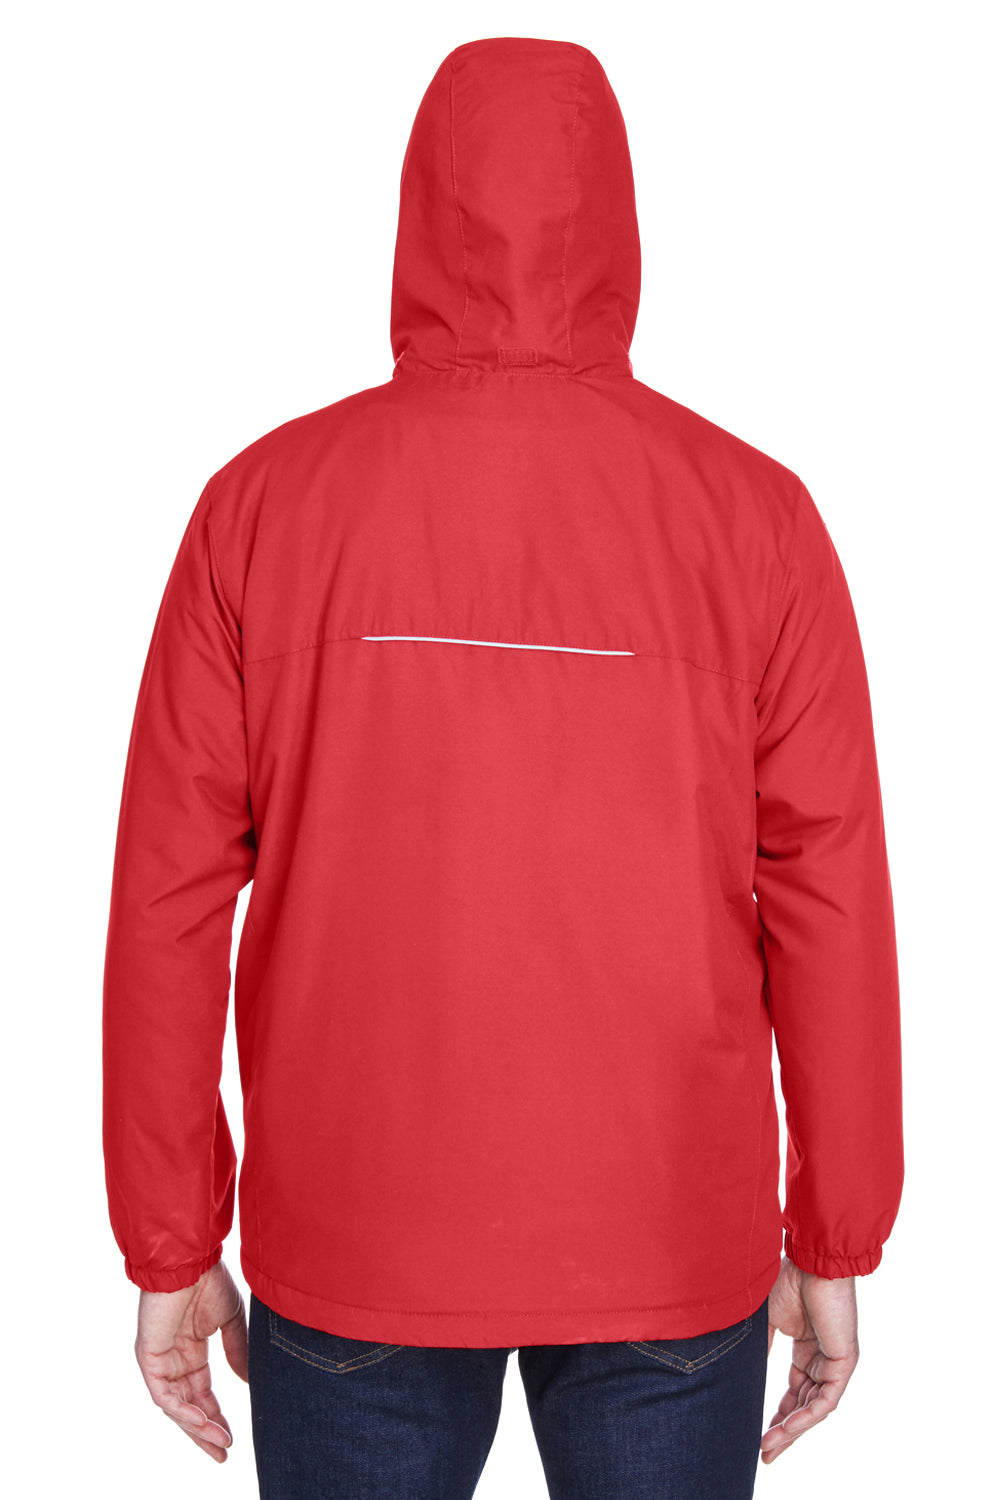 Core 365 88189 Mens Brisk Full Zip Hooded Jacket Red Back